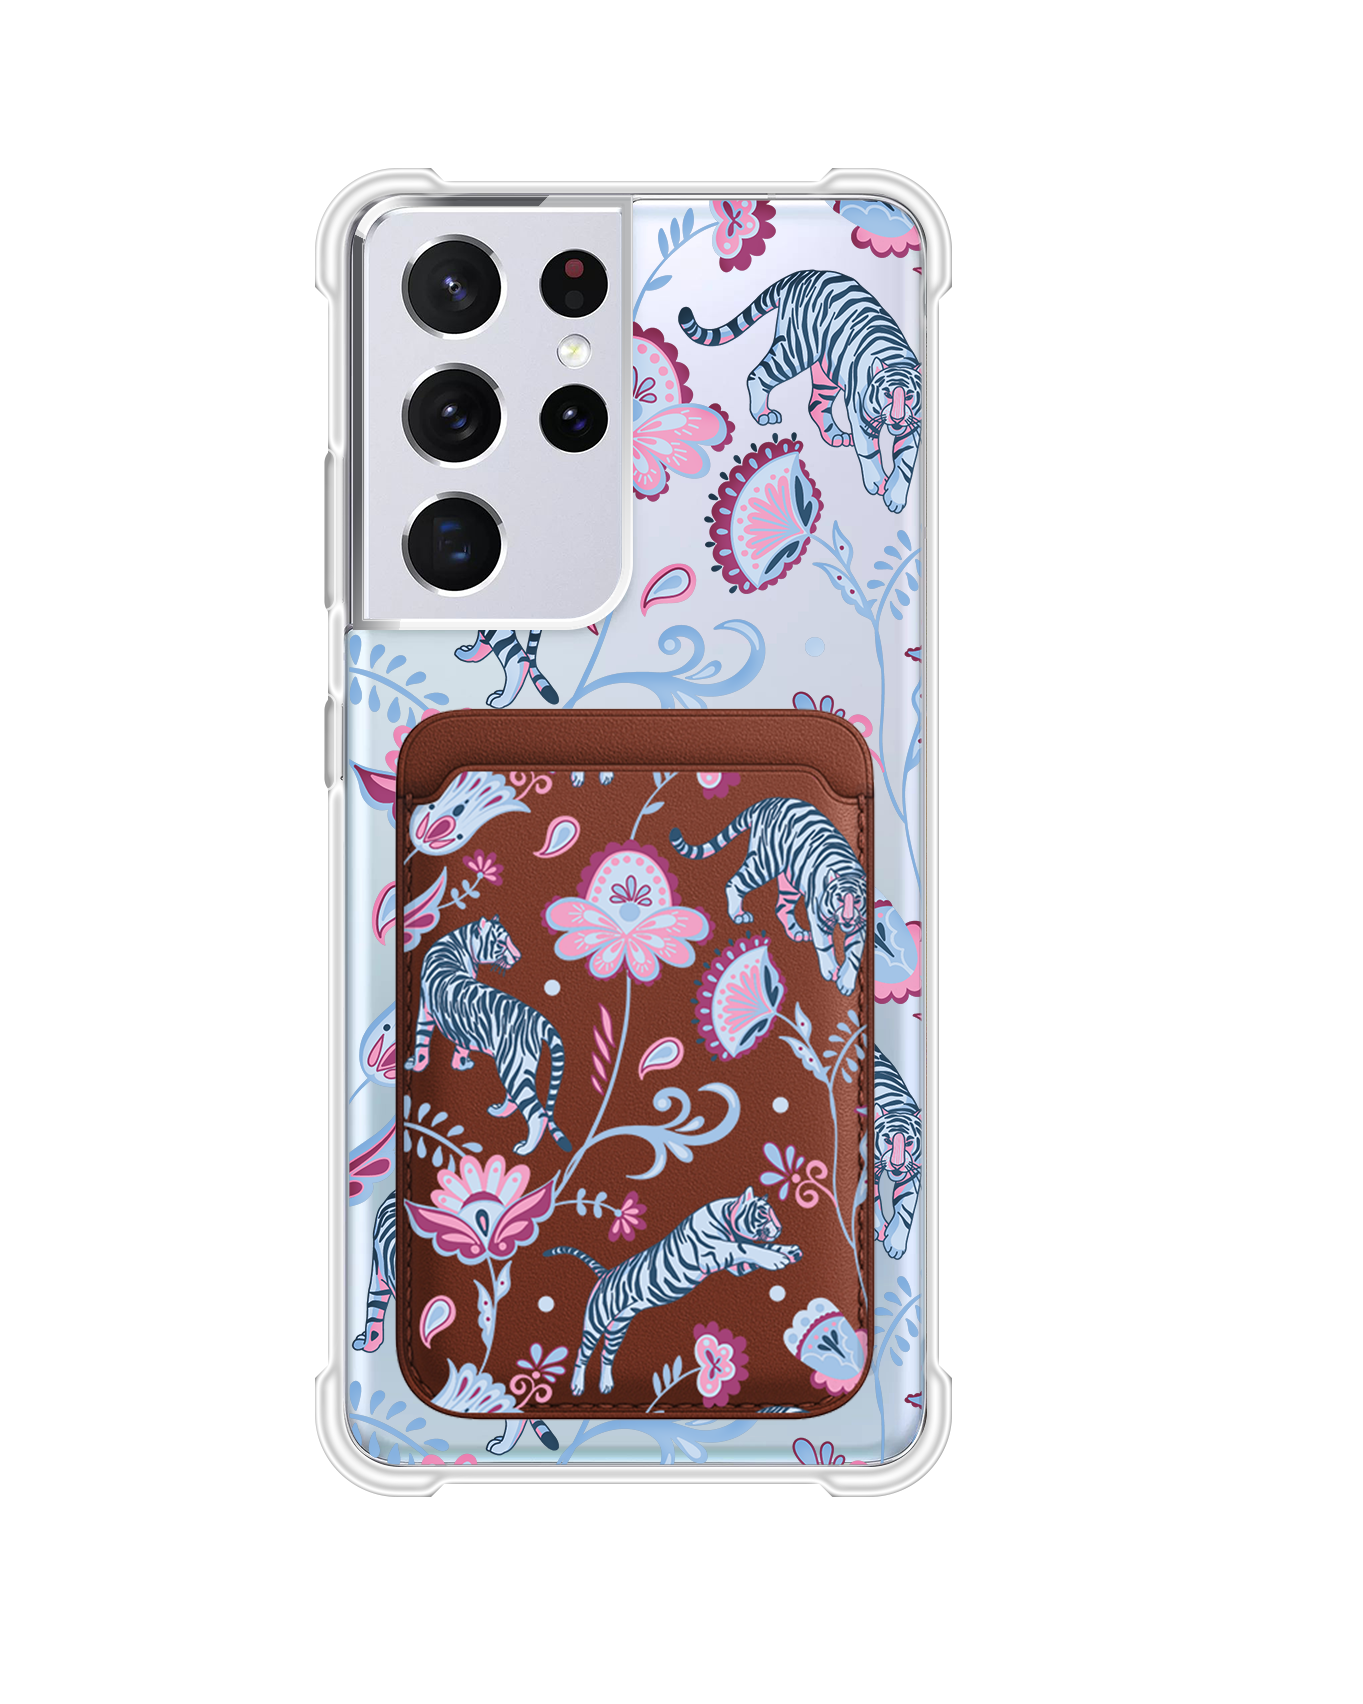 Android Magnetic Wallet Case - Tiger & Floral 3.0